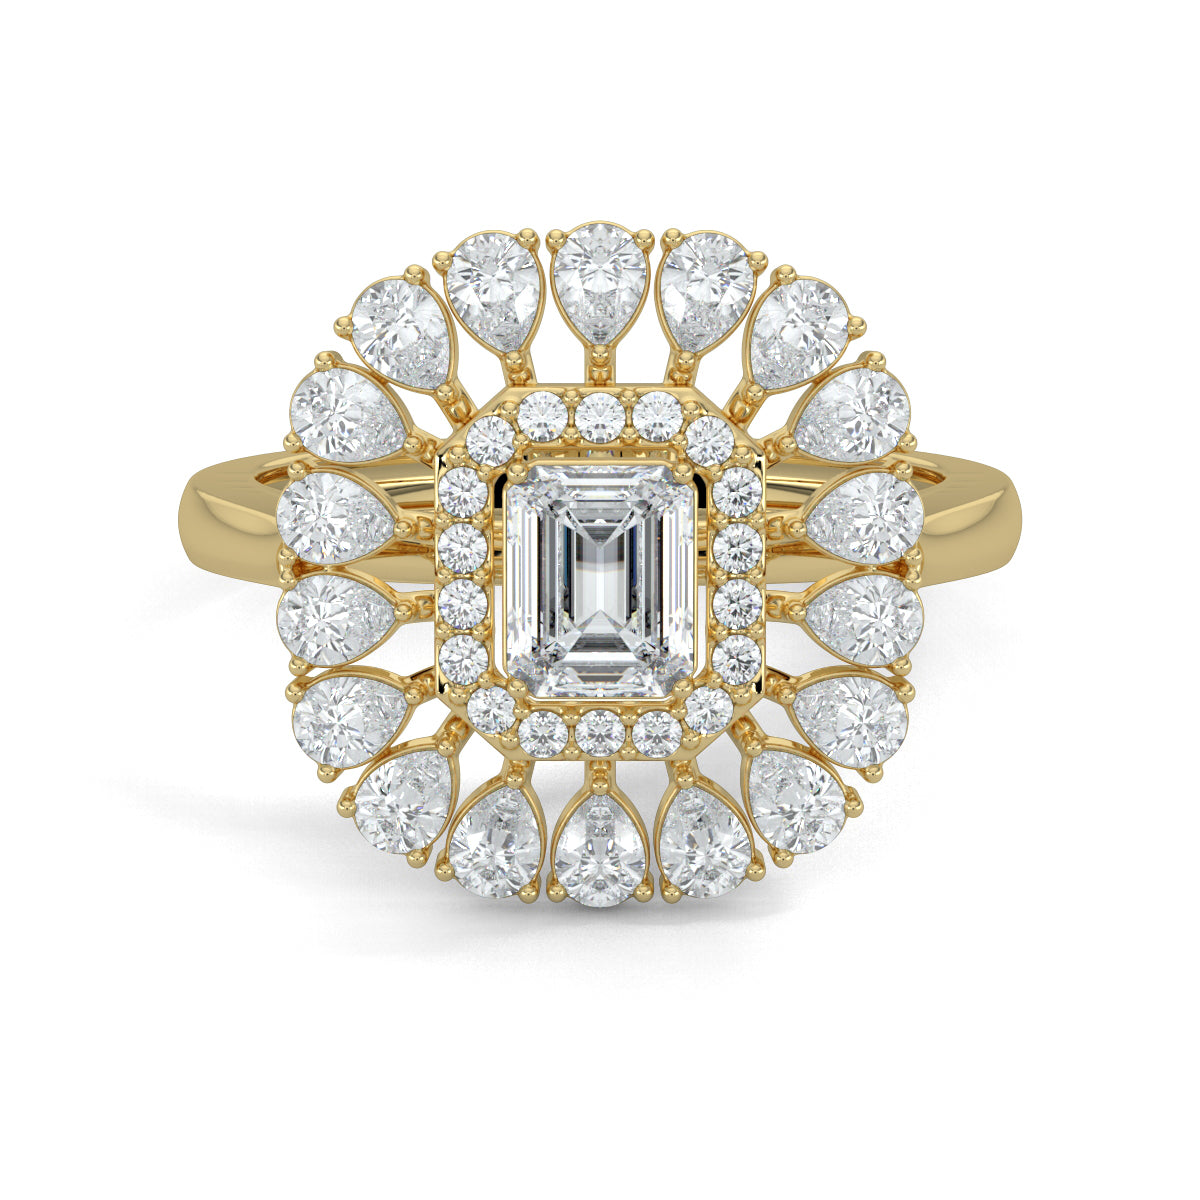 Yellow Gold, Diamond Ring, natural diamond ring, lab-grown diamond ring, exquisite diamond ring, emerald shape diamond, round diamond border, pear-shaped diamond accents, elegant jewelry, statement ring, cocktail ring